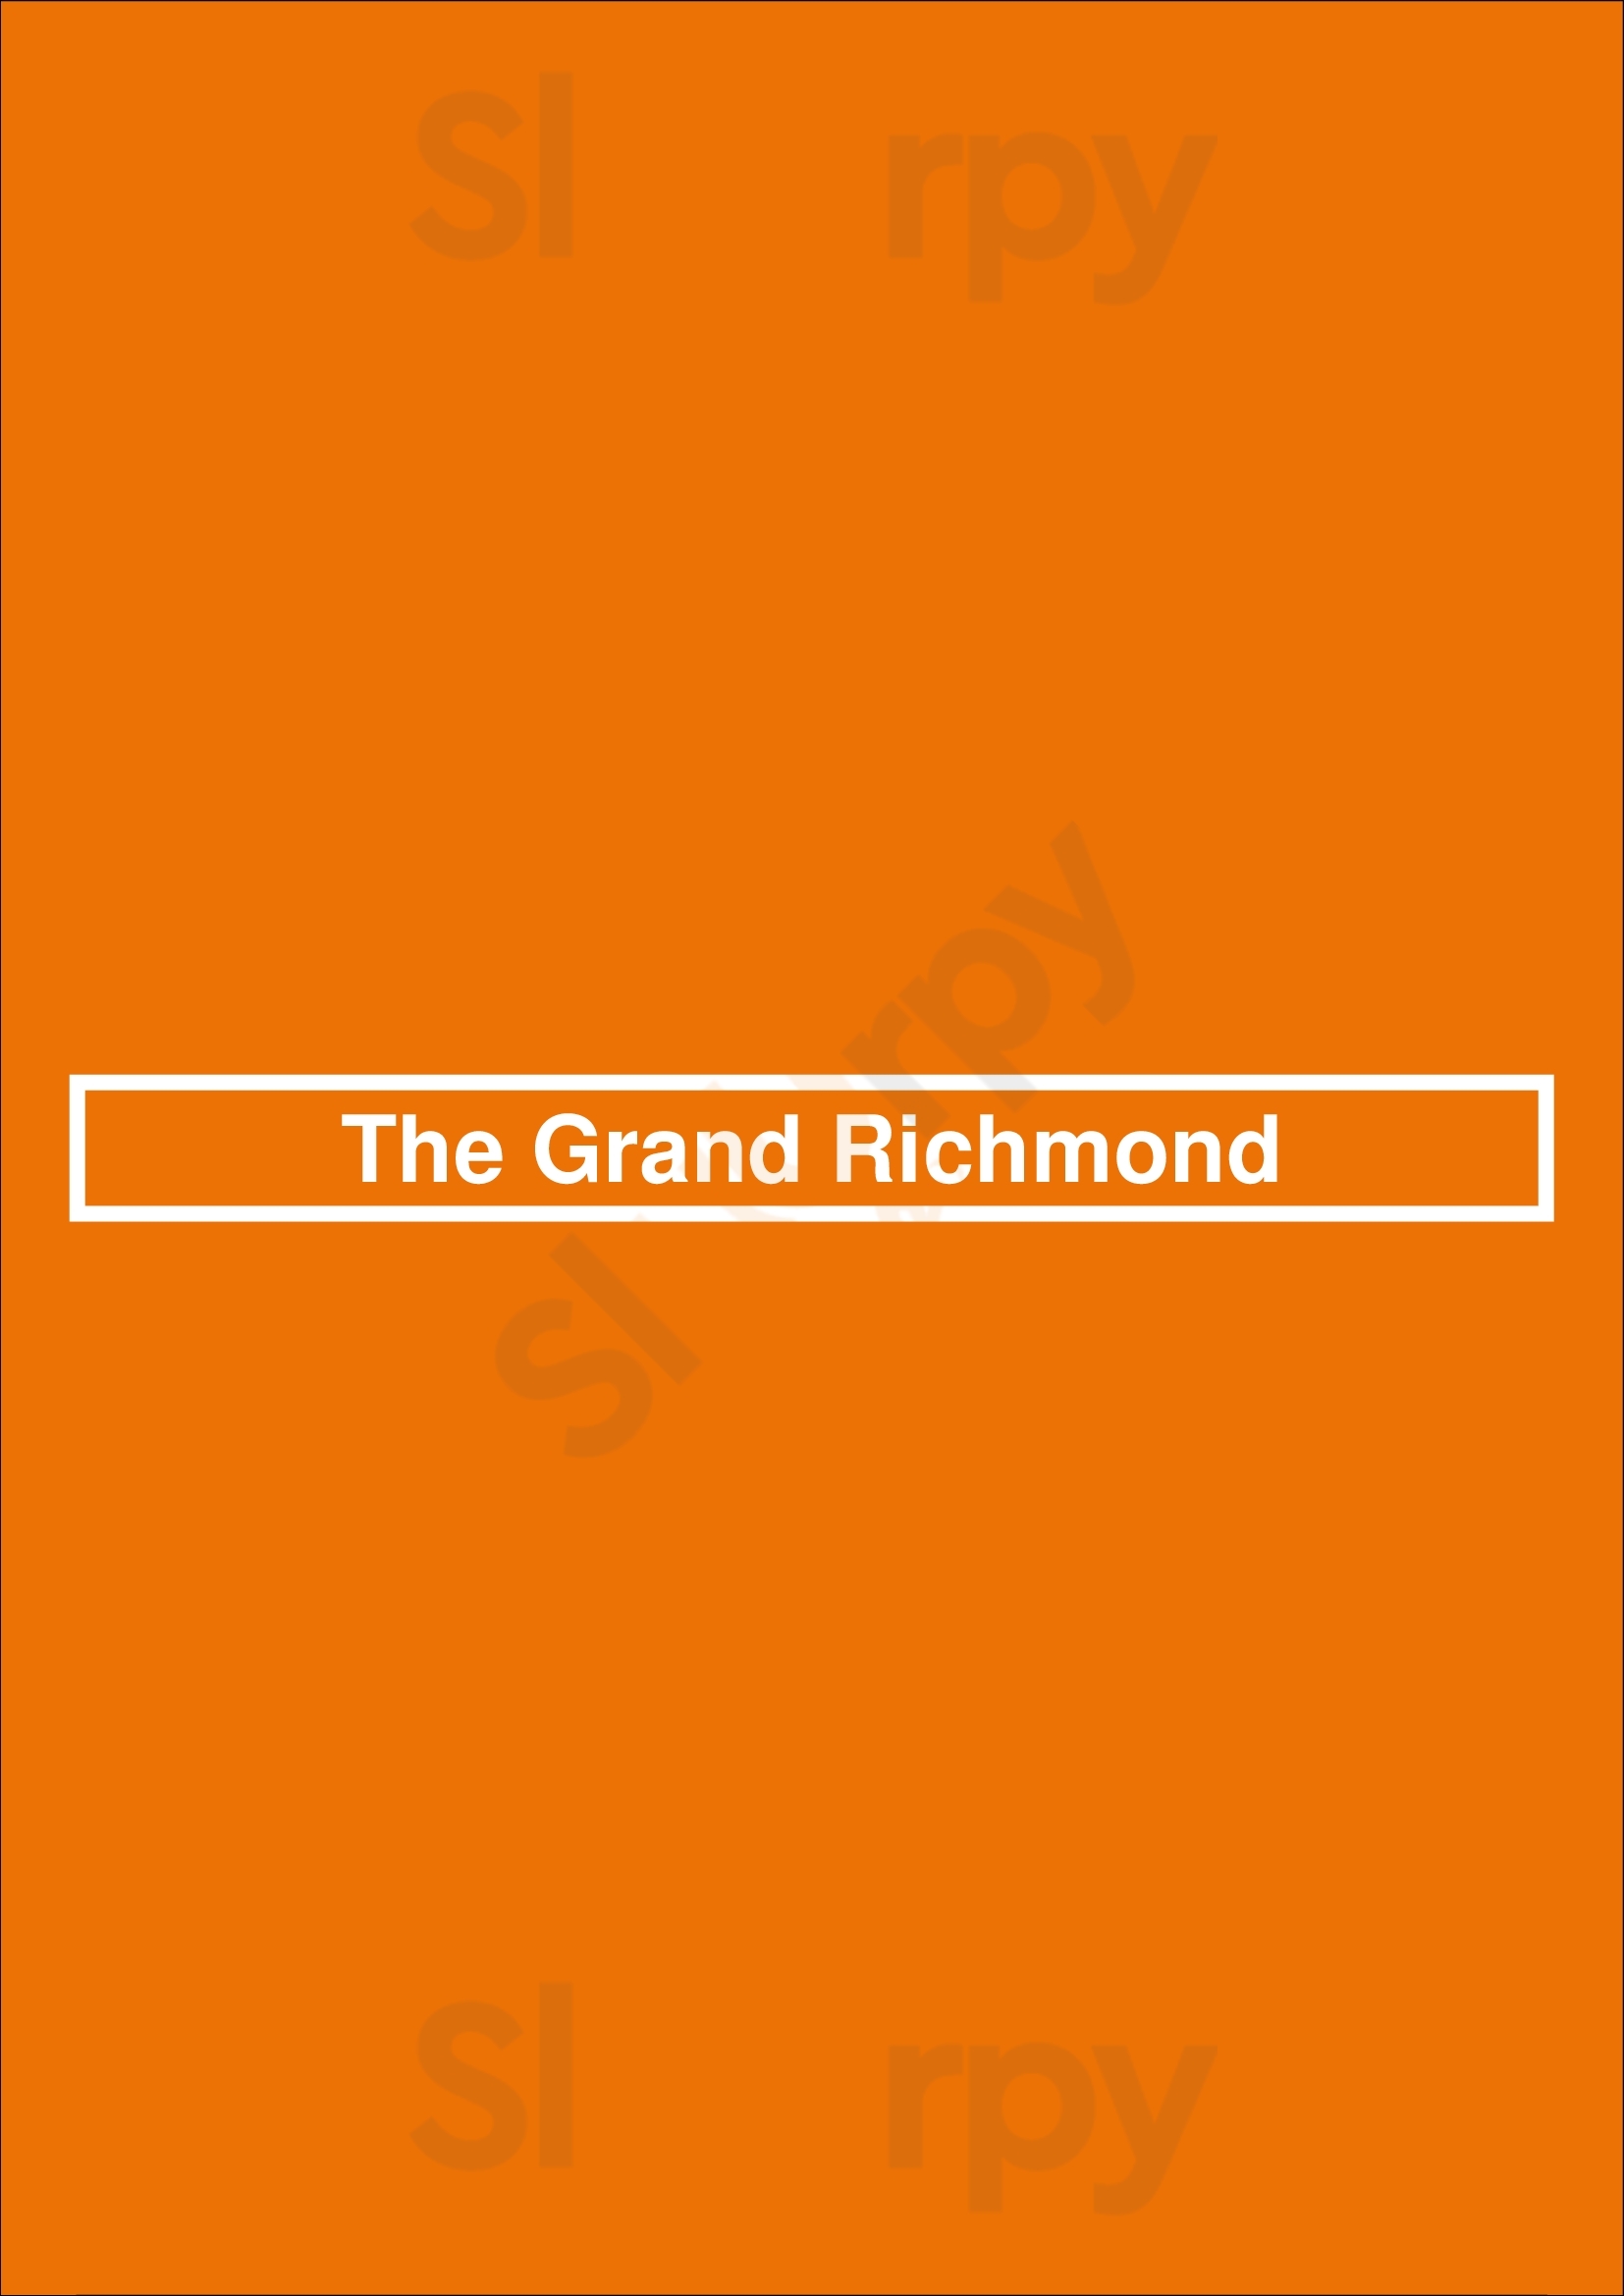 The Grand Hotel Richmond Richmond Menu - 1